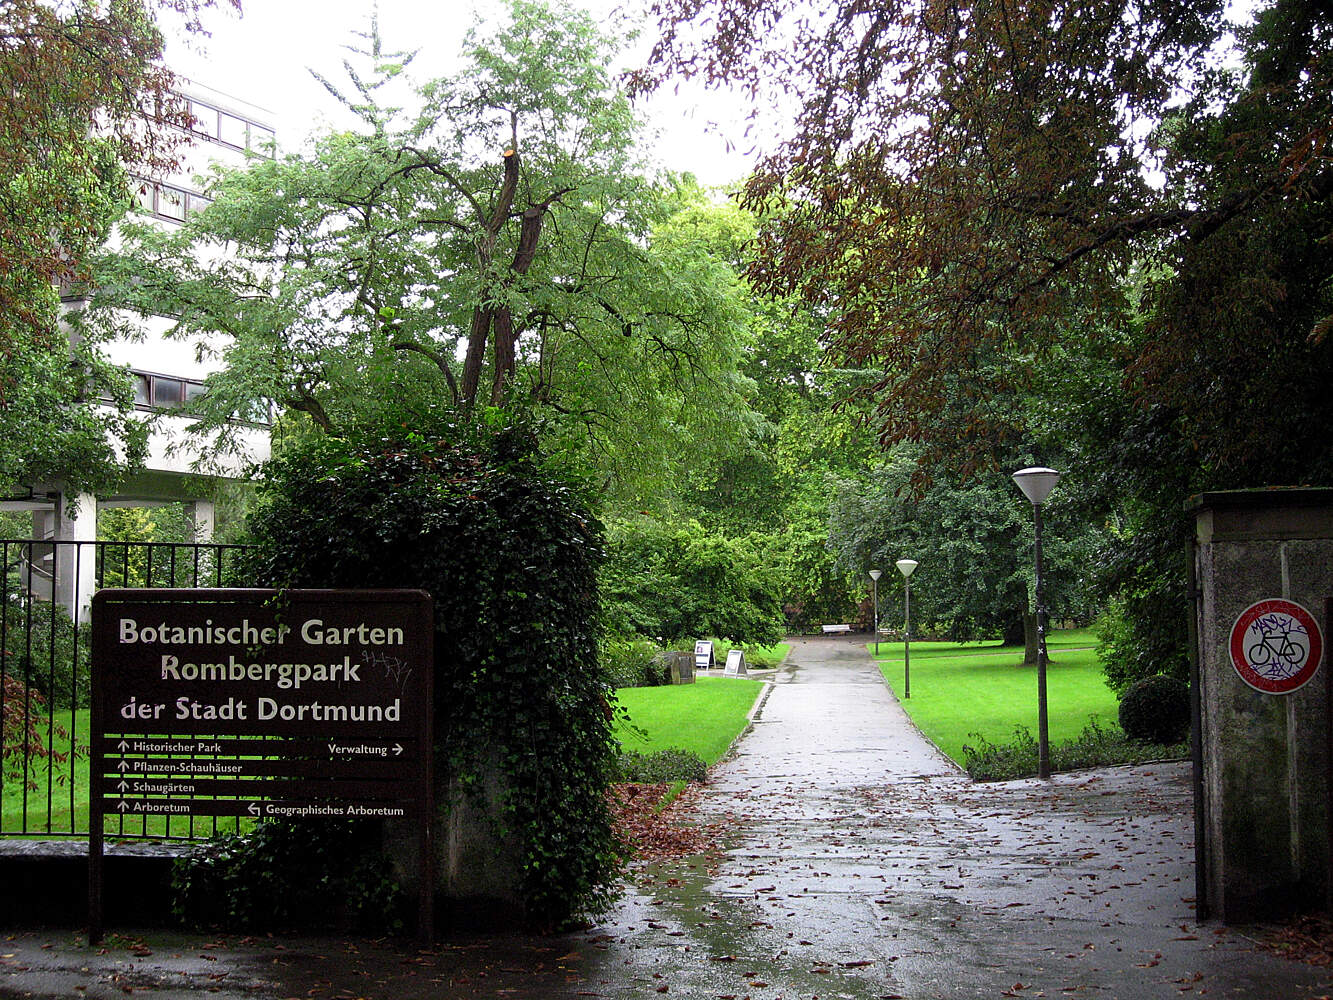 Botanischer Garten Solingen Schön Botanical Gard
en Rombergpark